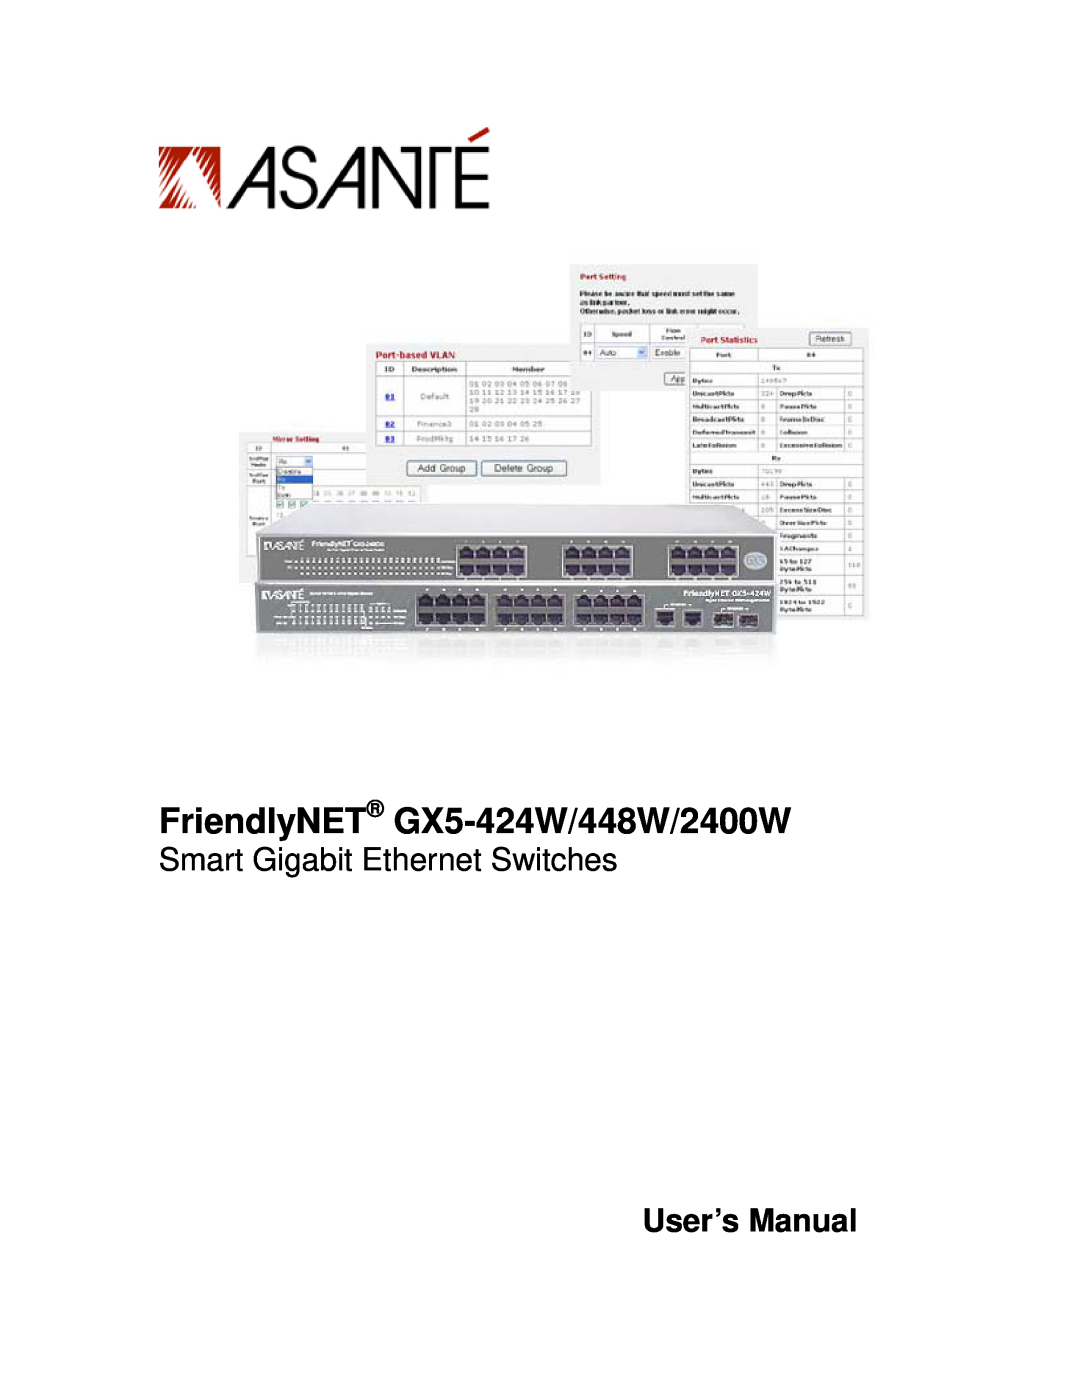 Asante Technologies GX5-2400W user manual FriendlyNET GX5-424W/448W/2400W, Smart Gigabit Ethernet Switches, User’s Manual 